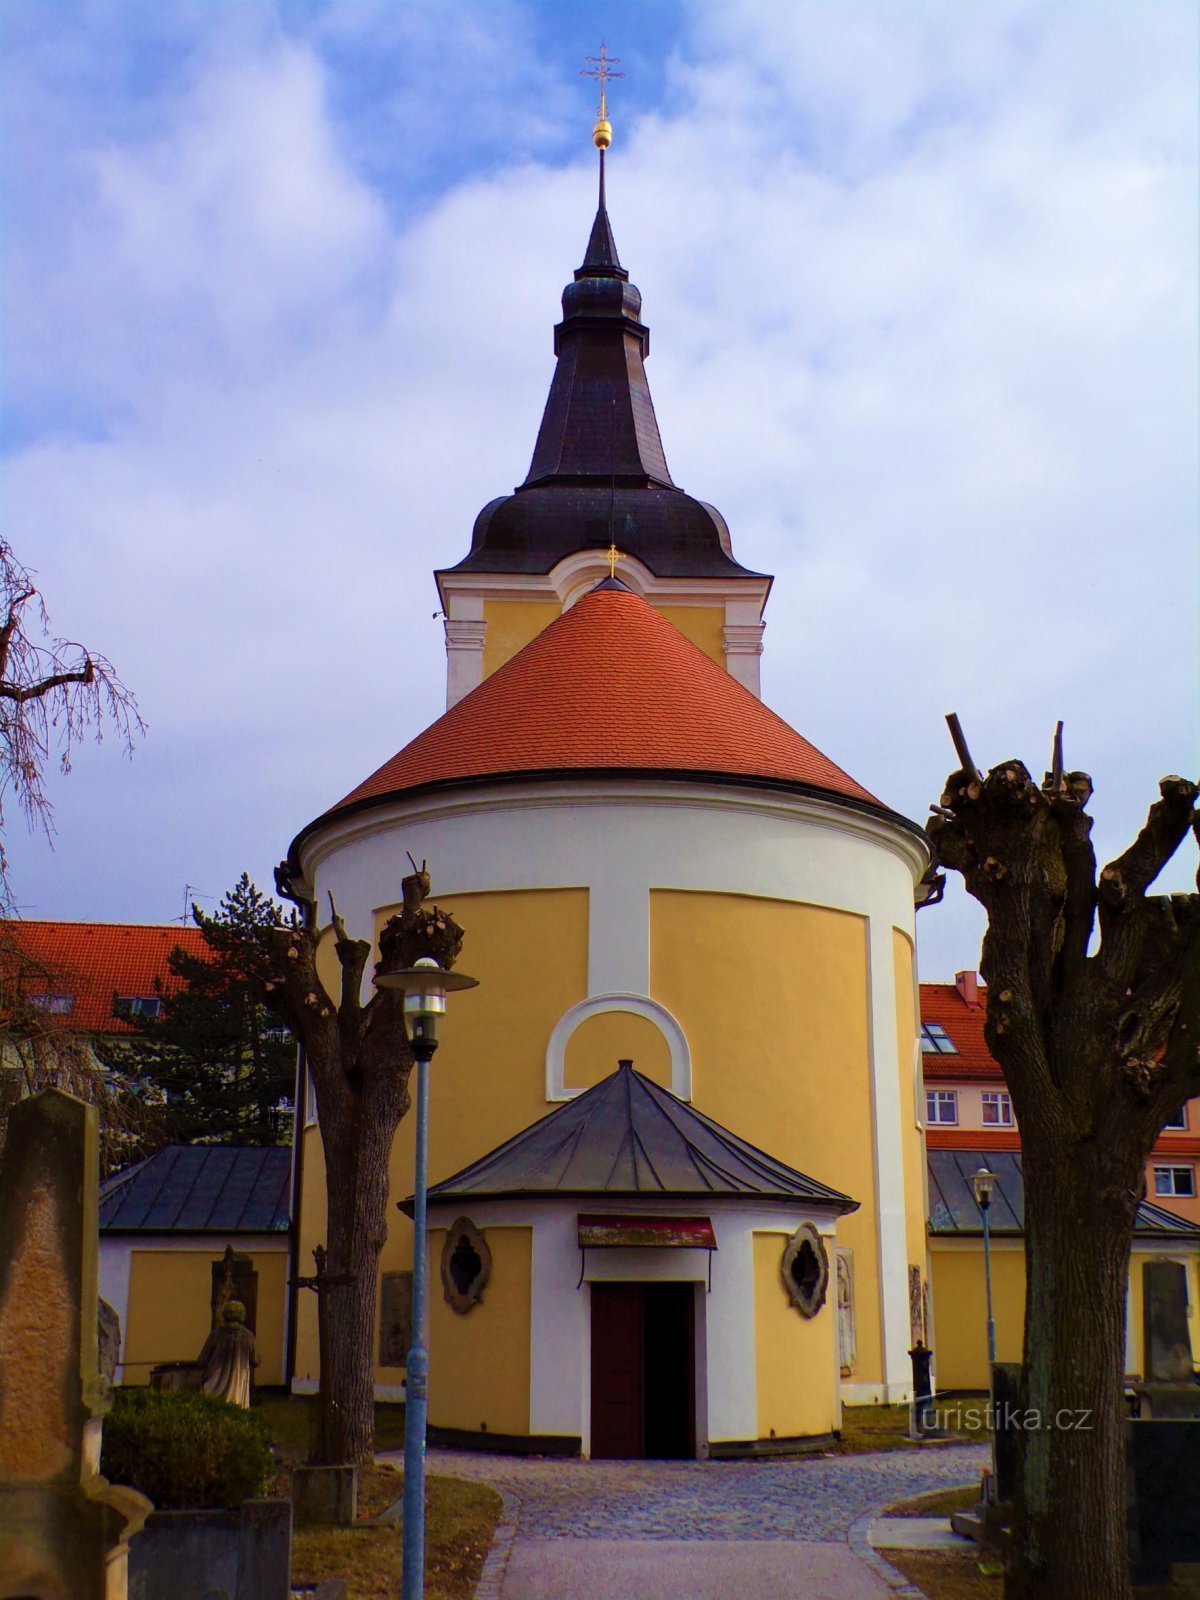 Cemitério Igreja de Nossa Senhora das Dores (Jičín, 4.3.2022/XNUMX/XNUMX)